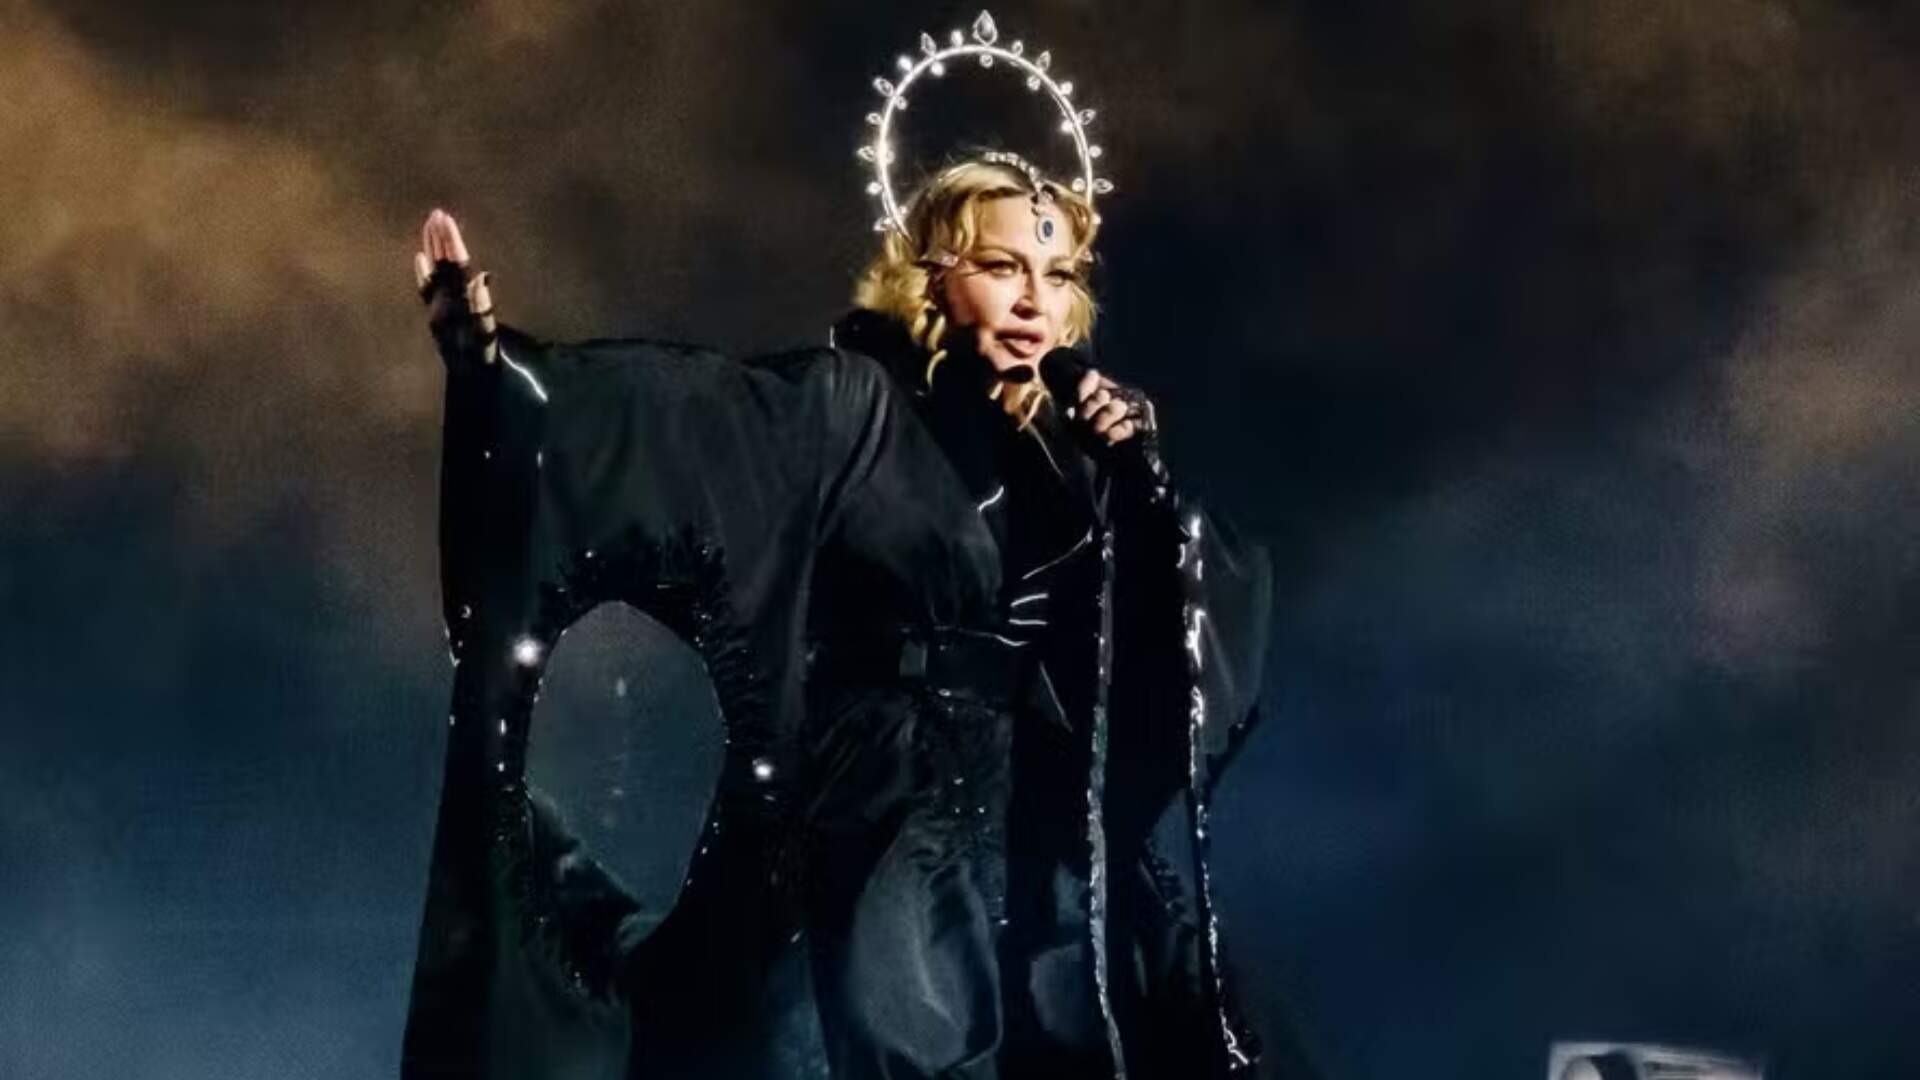 Madonna volta ao Brasil depois de 12 anos; confira tudo o que se sabe até o momento